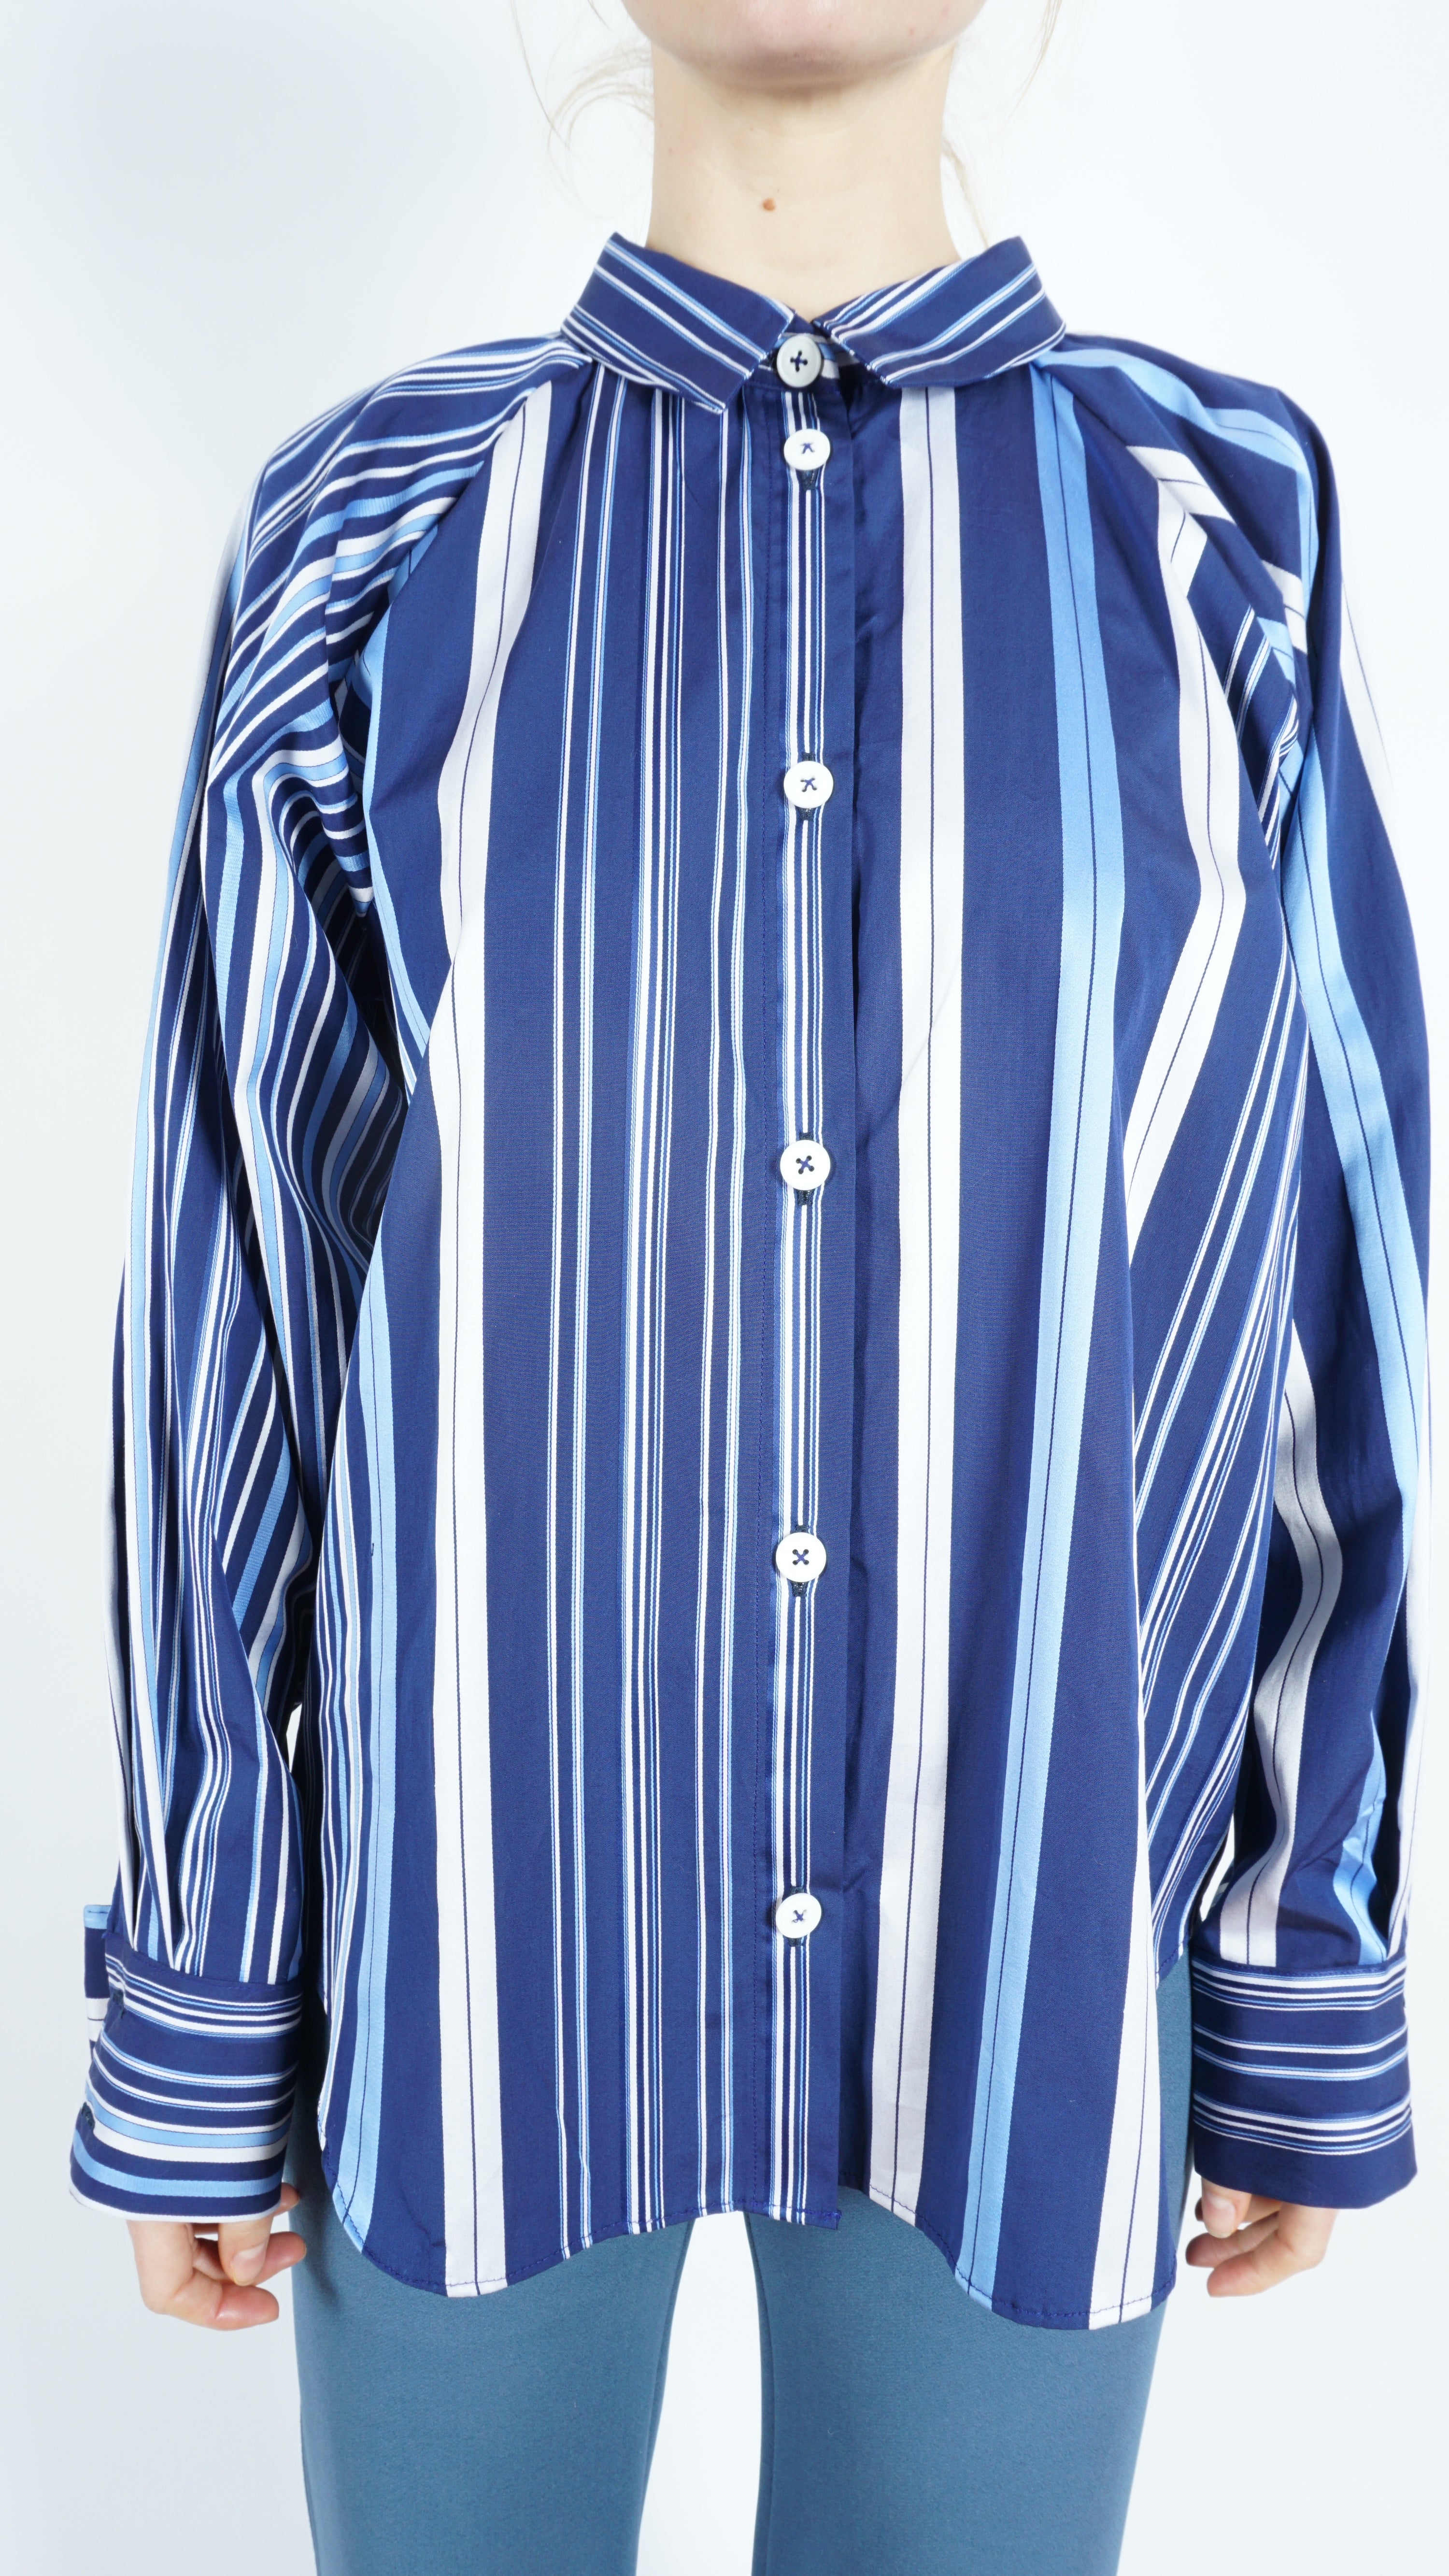 Striped shirt by Sabine Poupinel